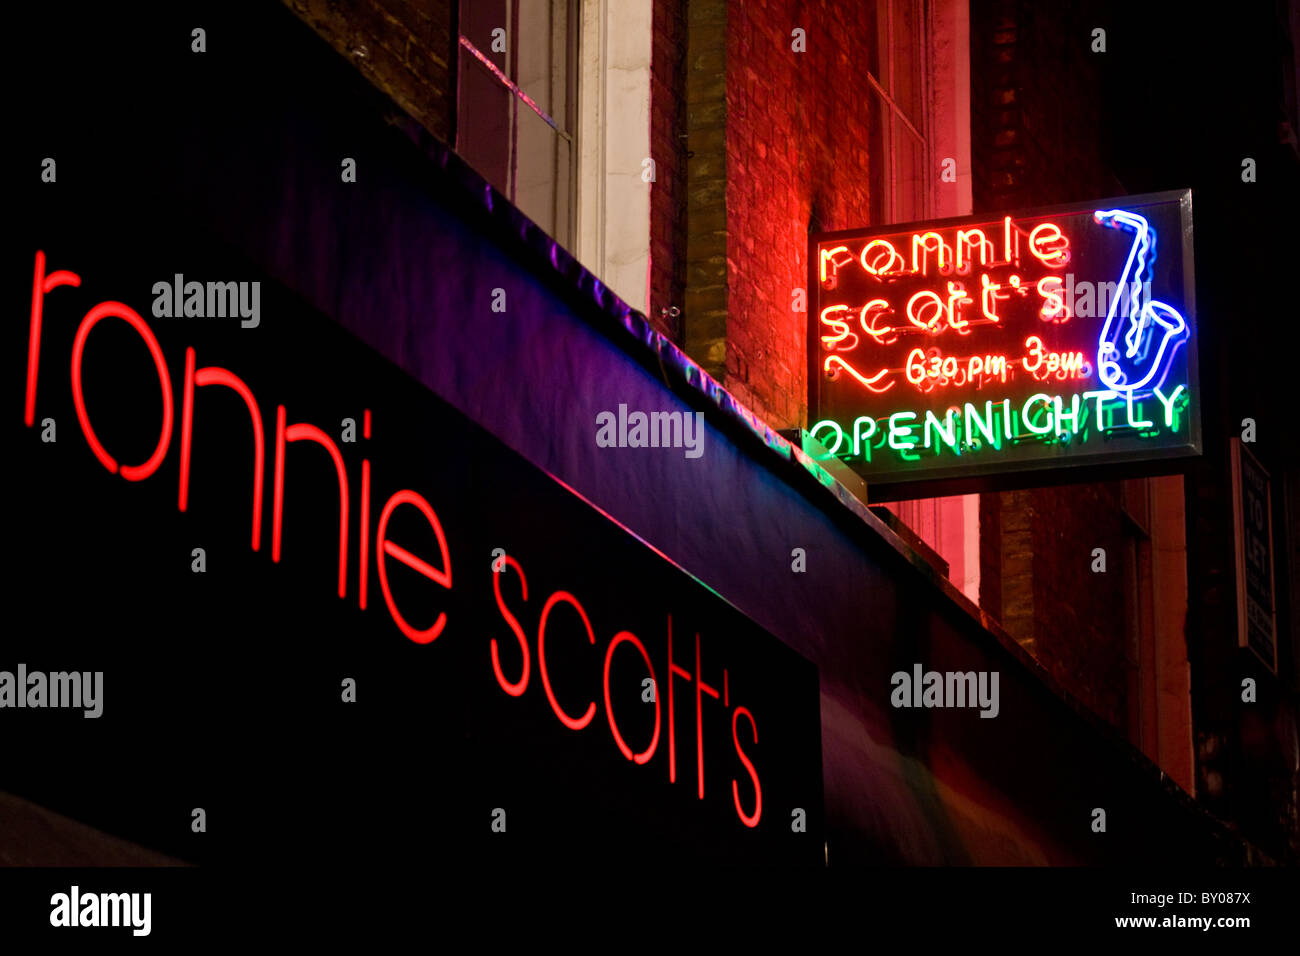 Ronnie Scotts Foto Stock